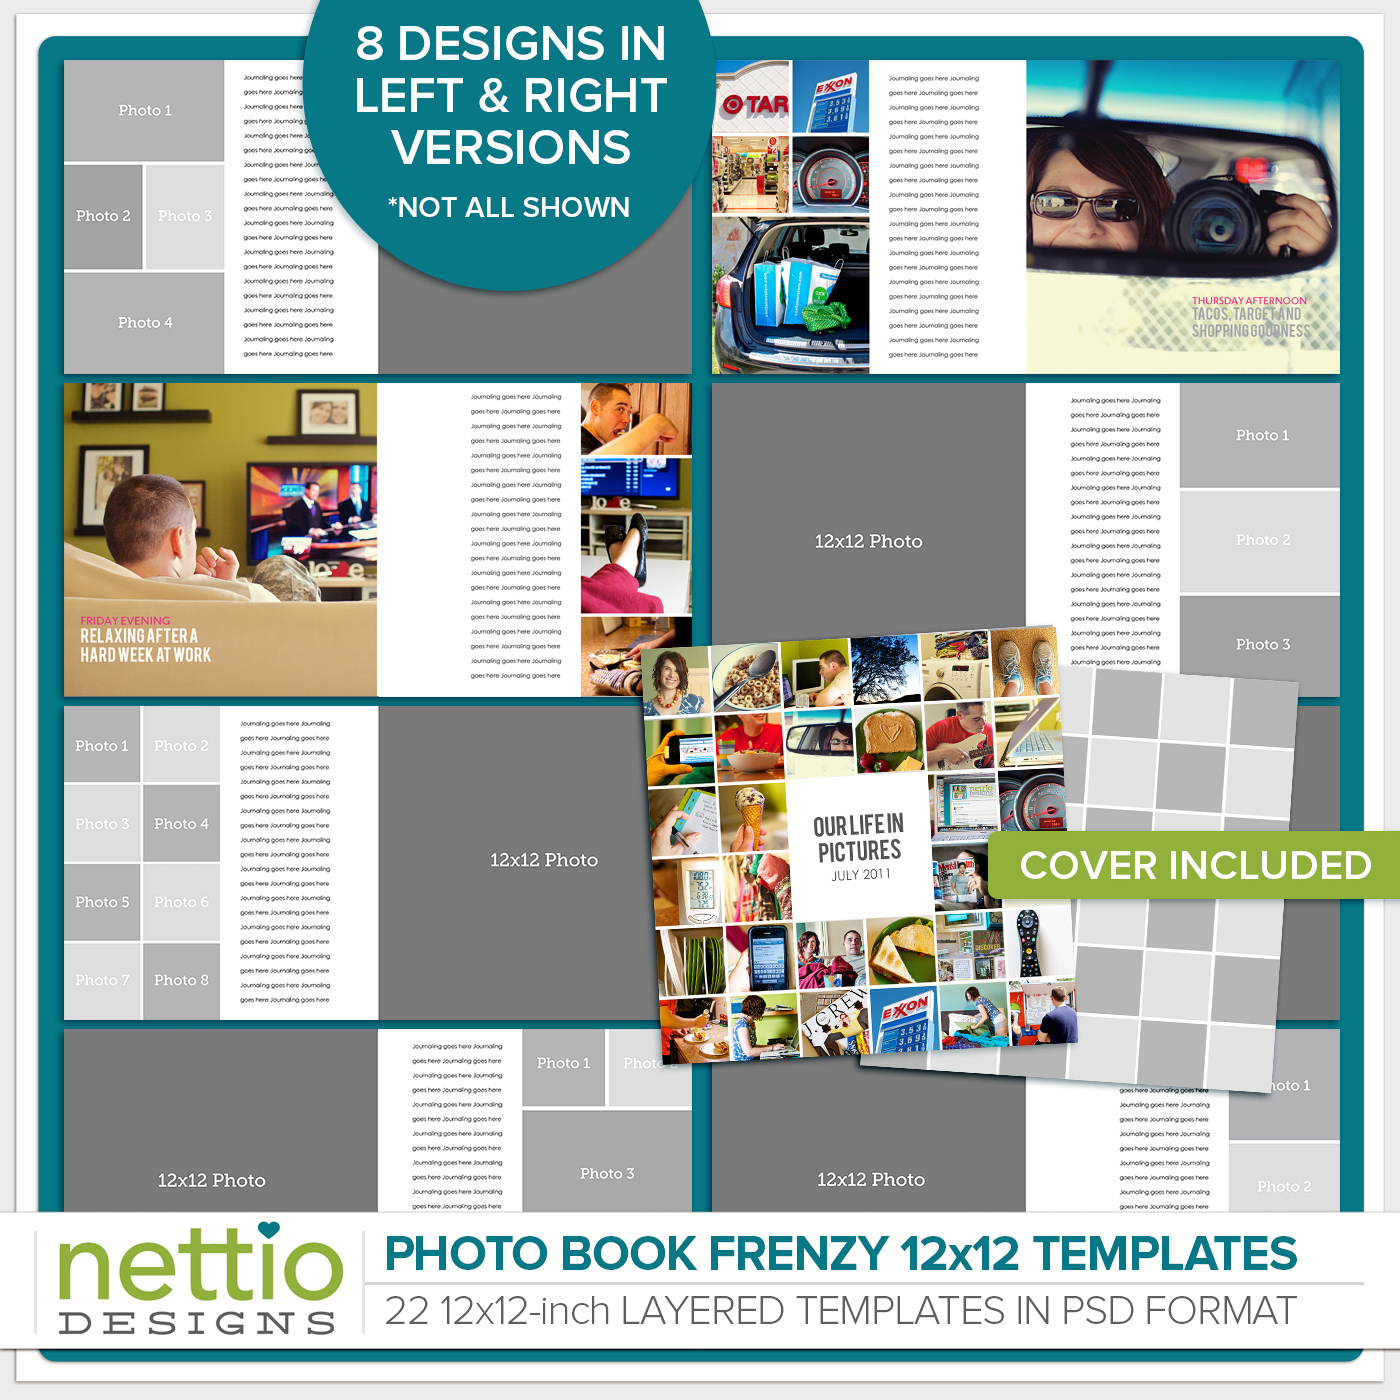 nettiodesigns_PhotoBookFrenzy12x12-preview1